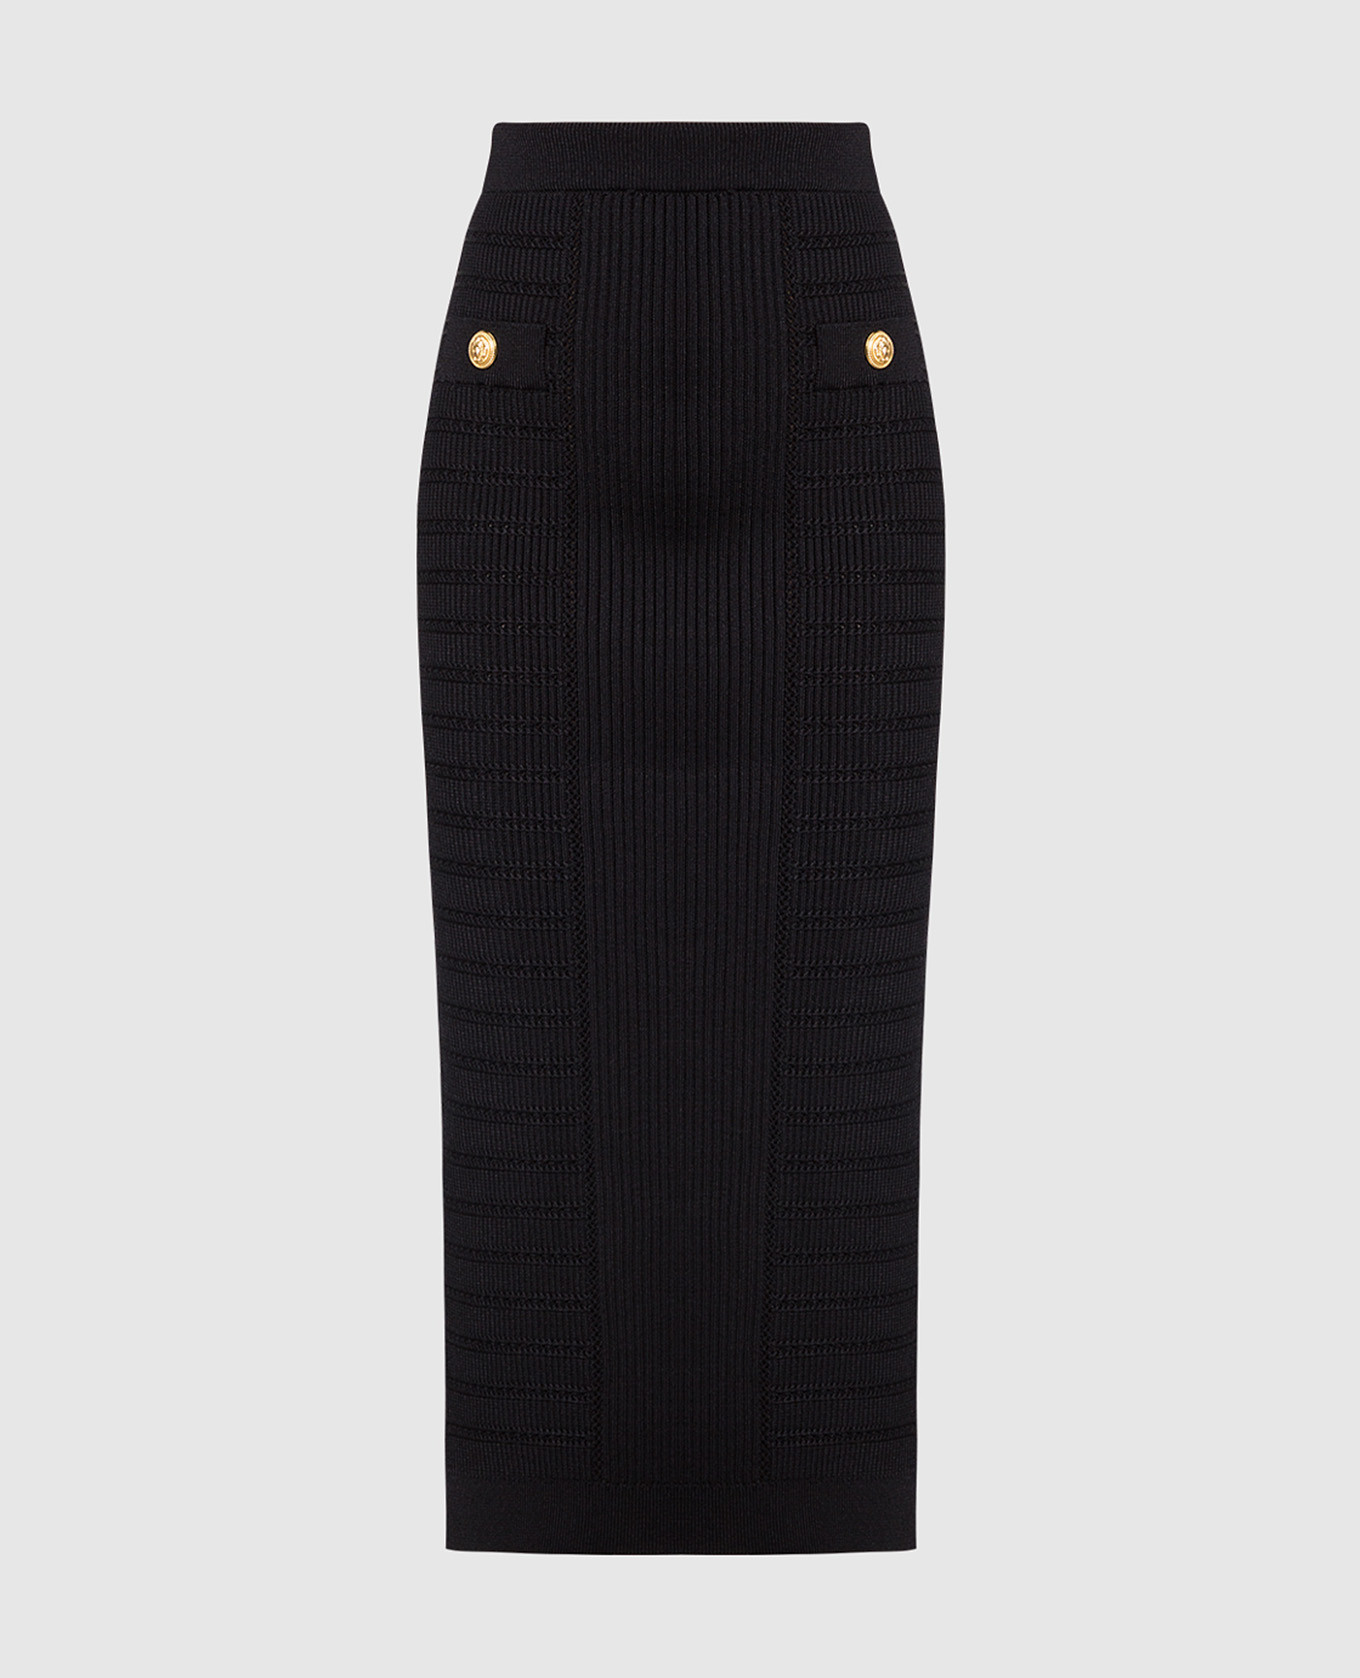 Black midi skirt with branded studs